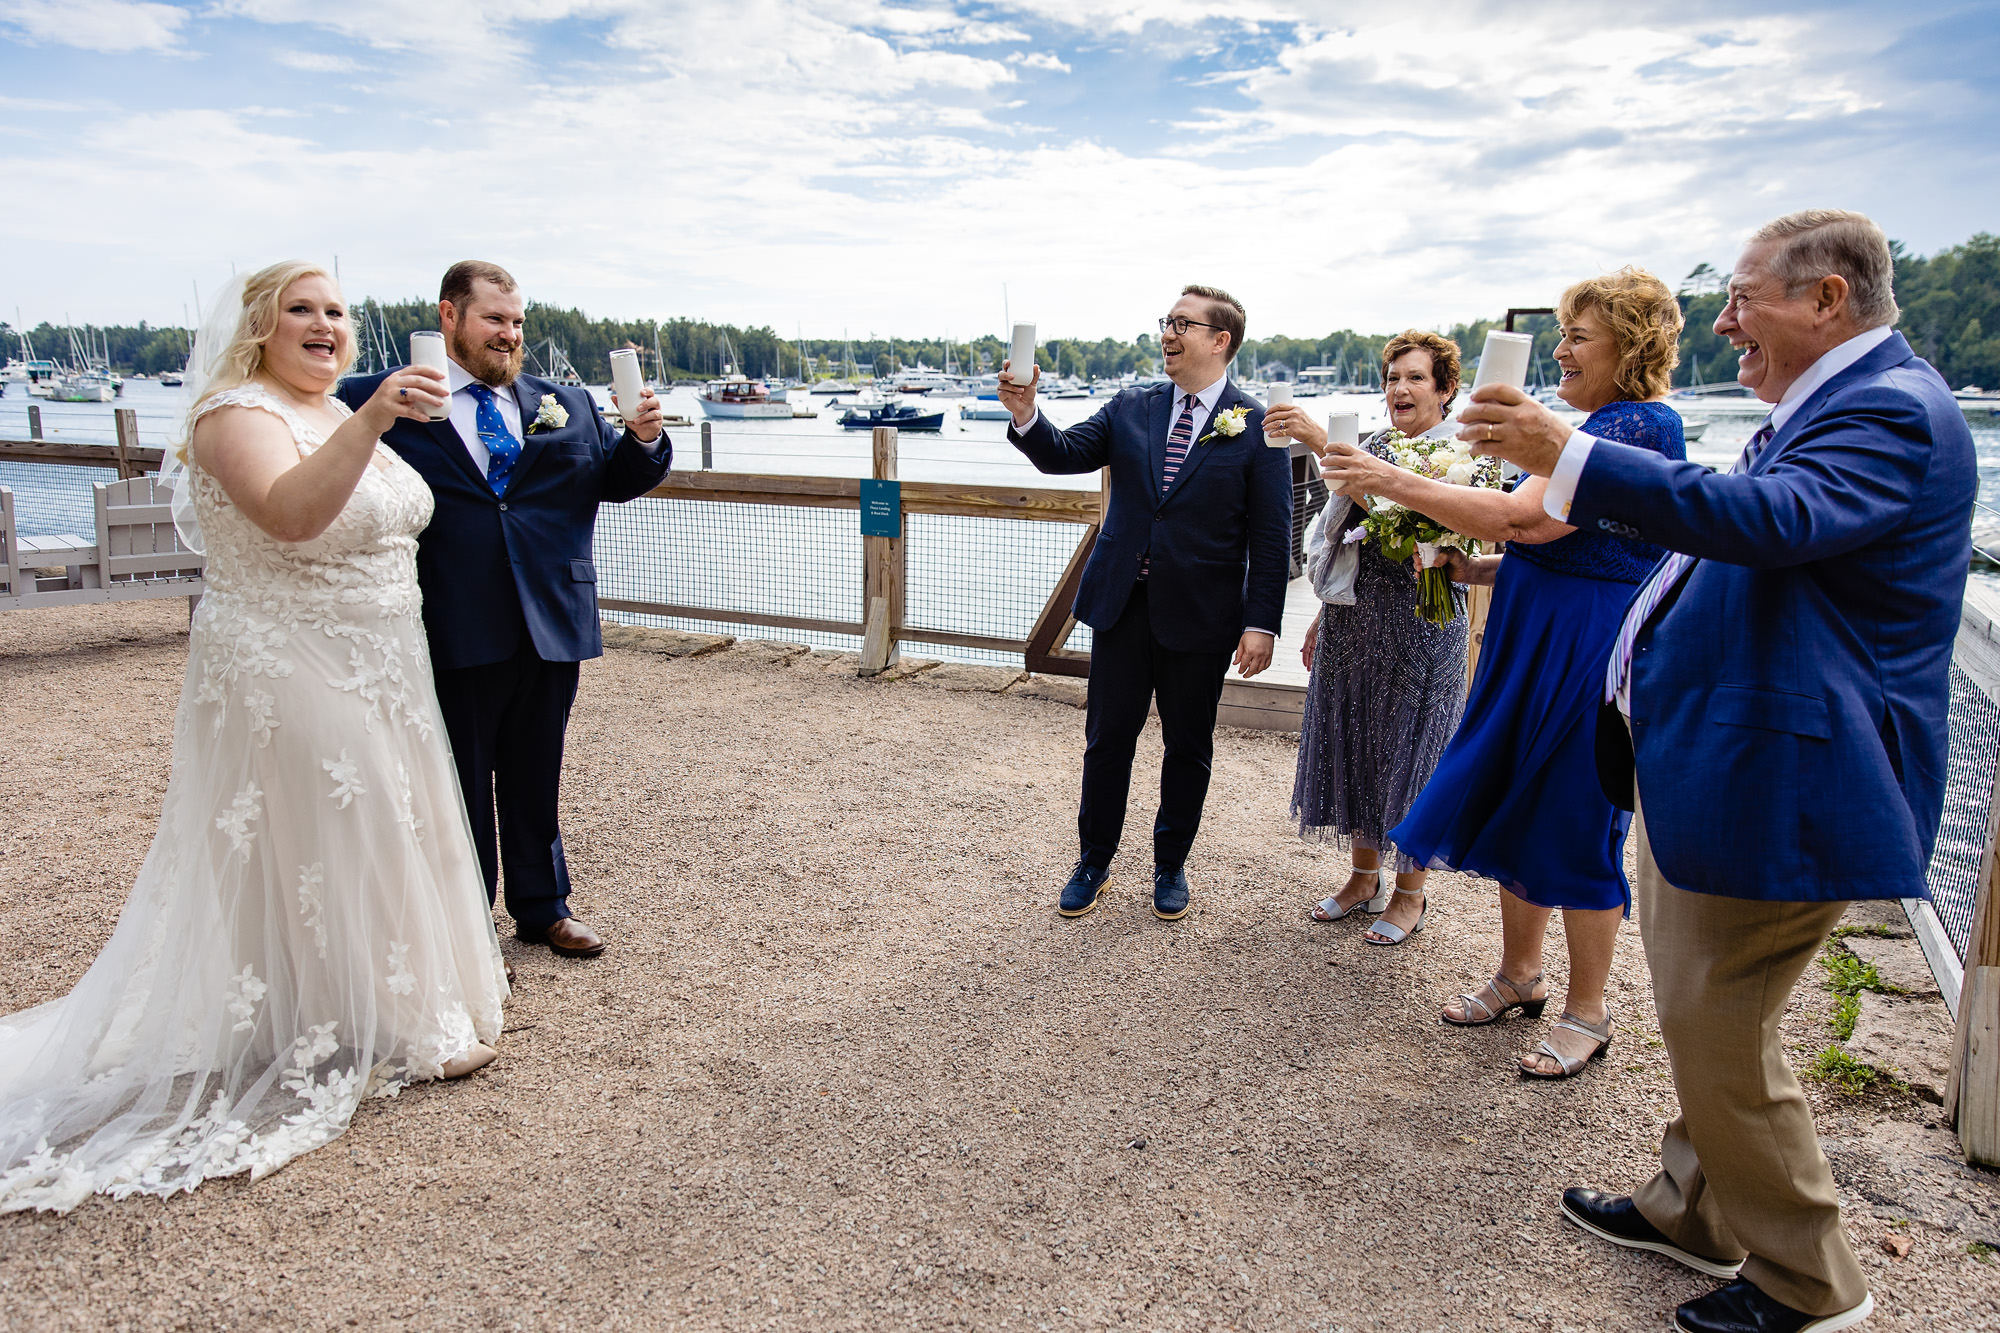 A beautiful wedding ceremony at Thuya Dock on MDI, Maine